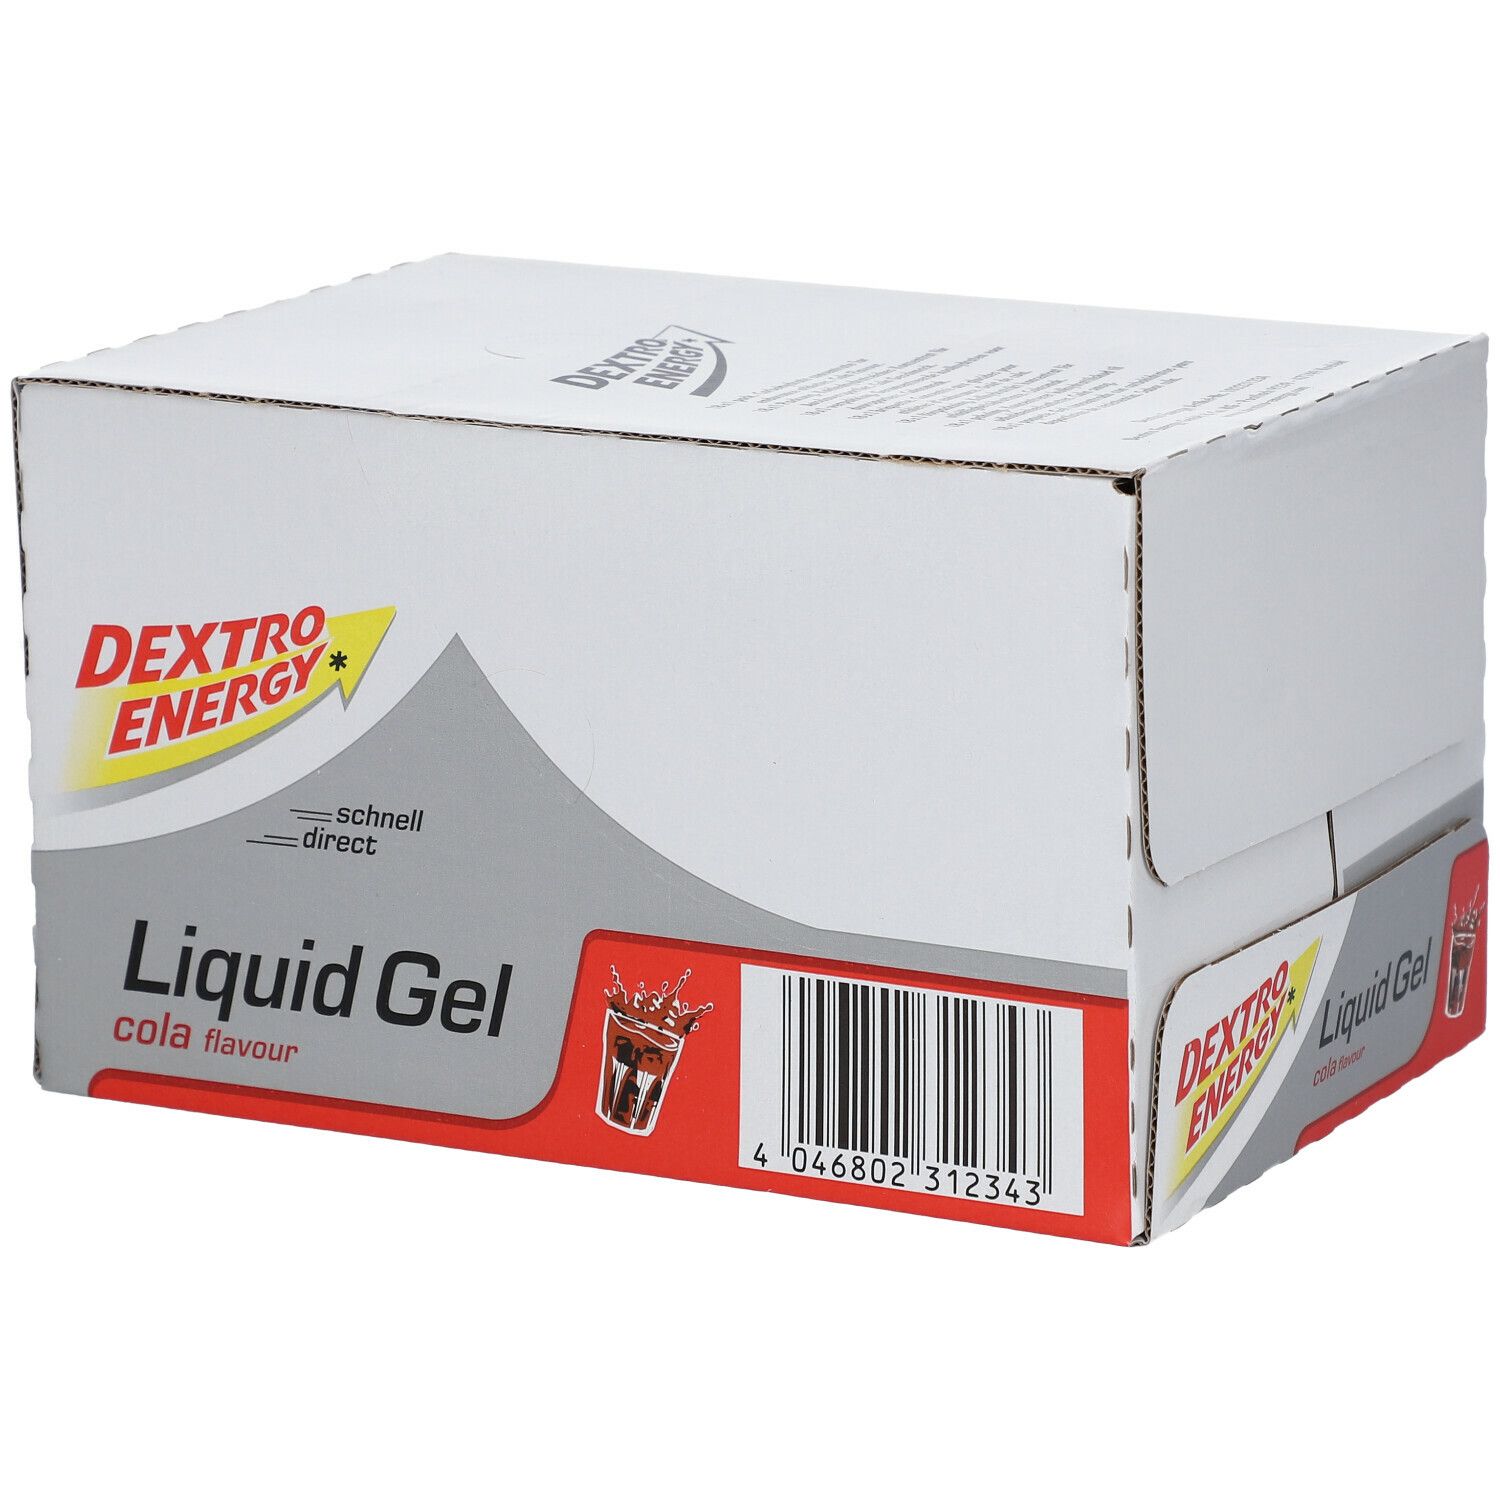 Image of Dextro Energy Liquid Gel Cola